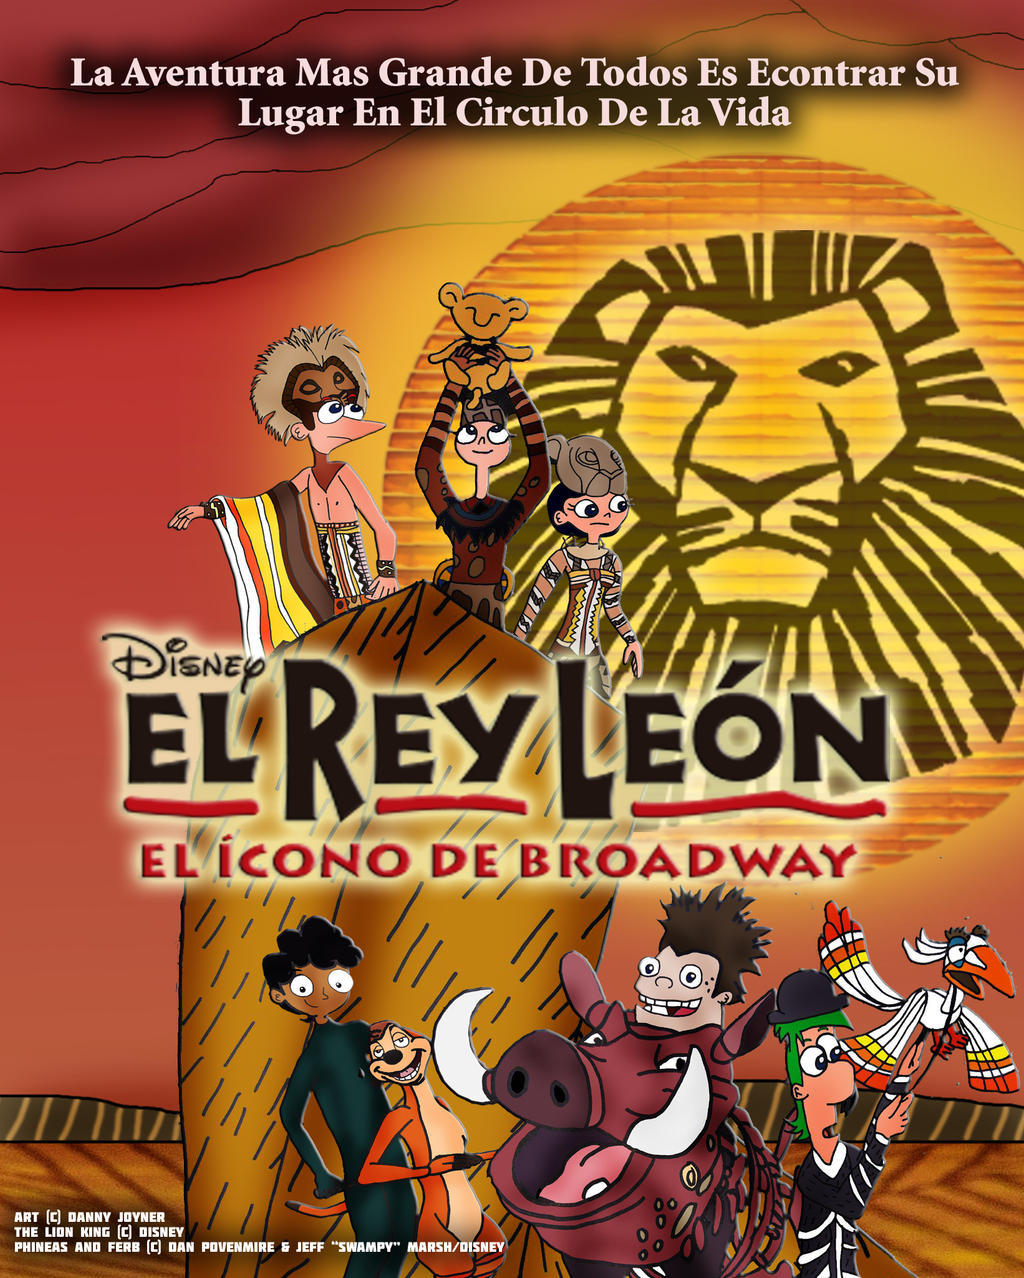 PNF en Disney's El Rey Leon Broadway Poster by RDJ1995 on DeviantArt